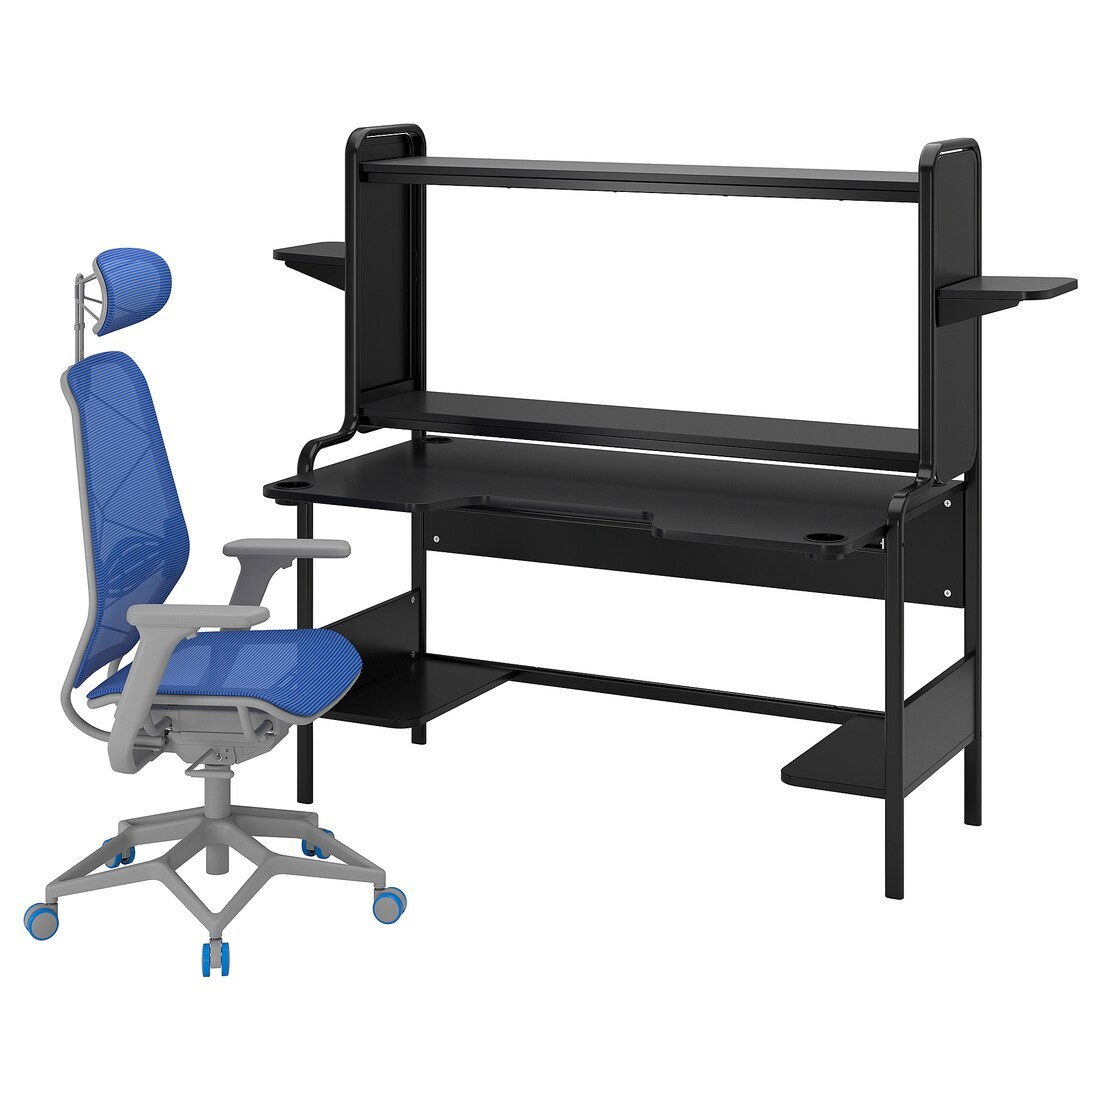 FREDDE / STYRSPEL Геймерский стол и стул, черный синий / светло-серый